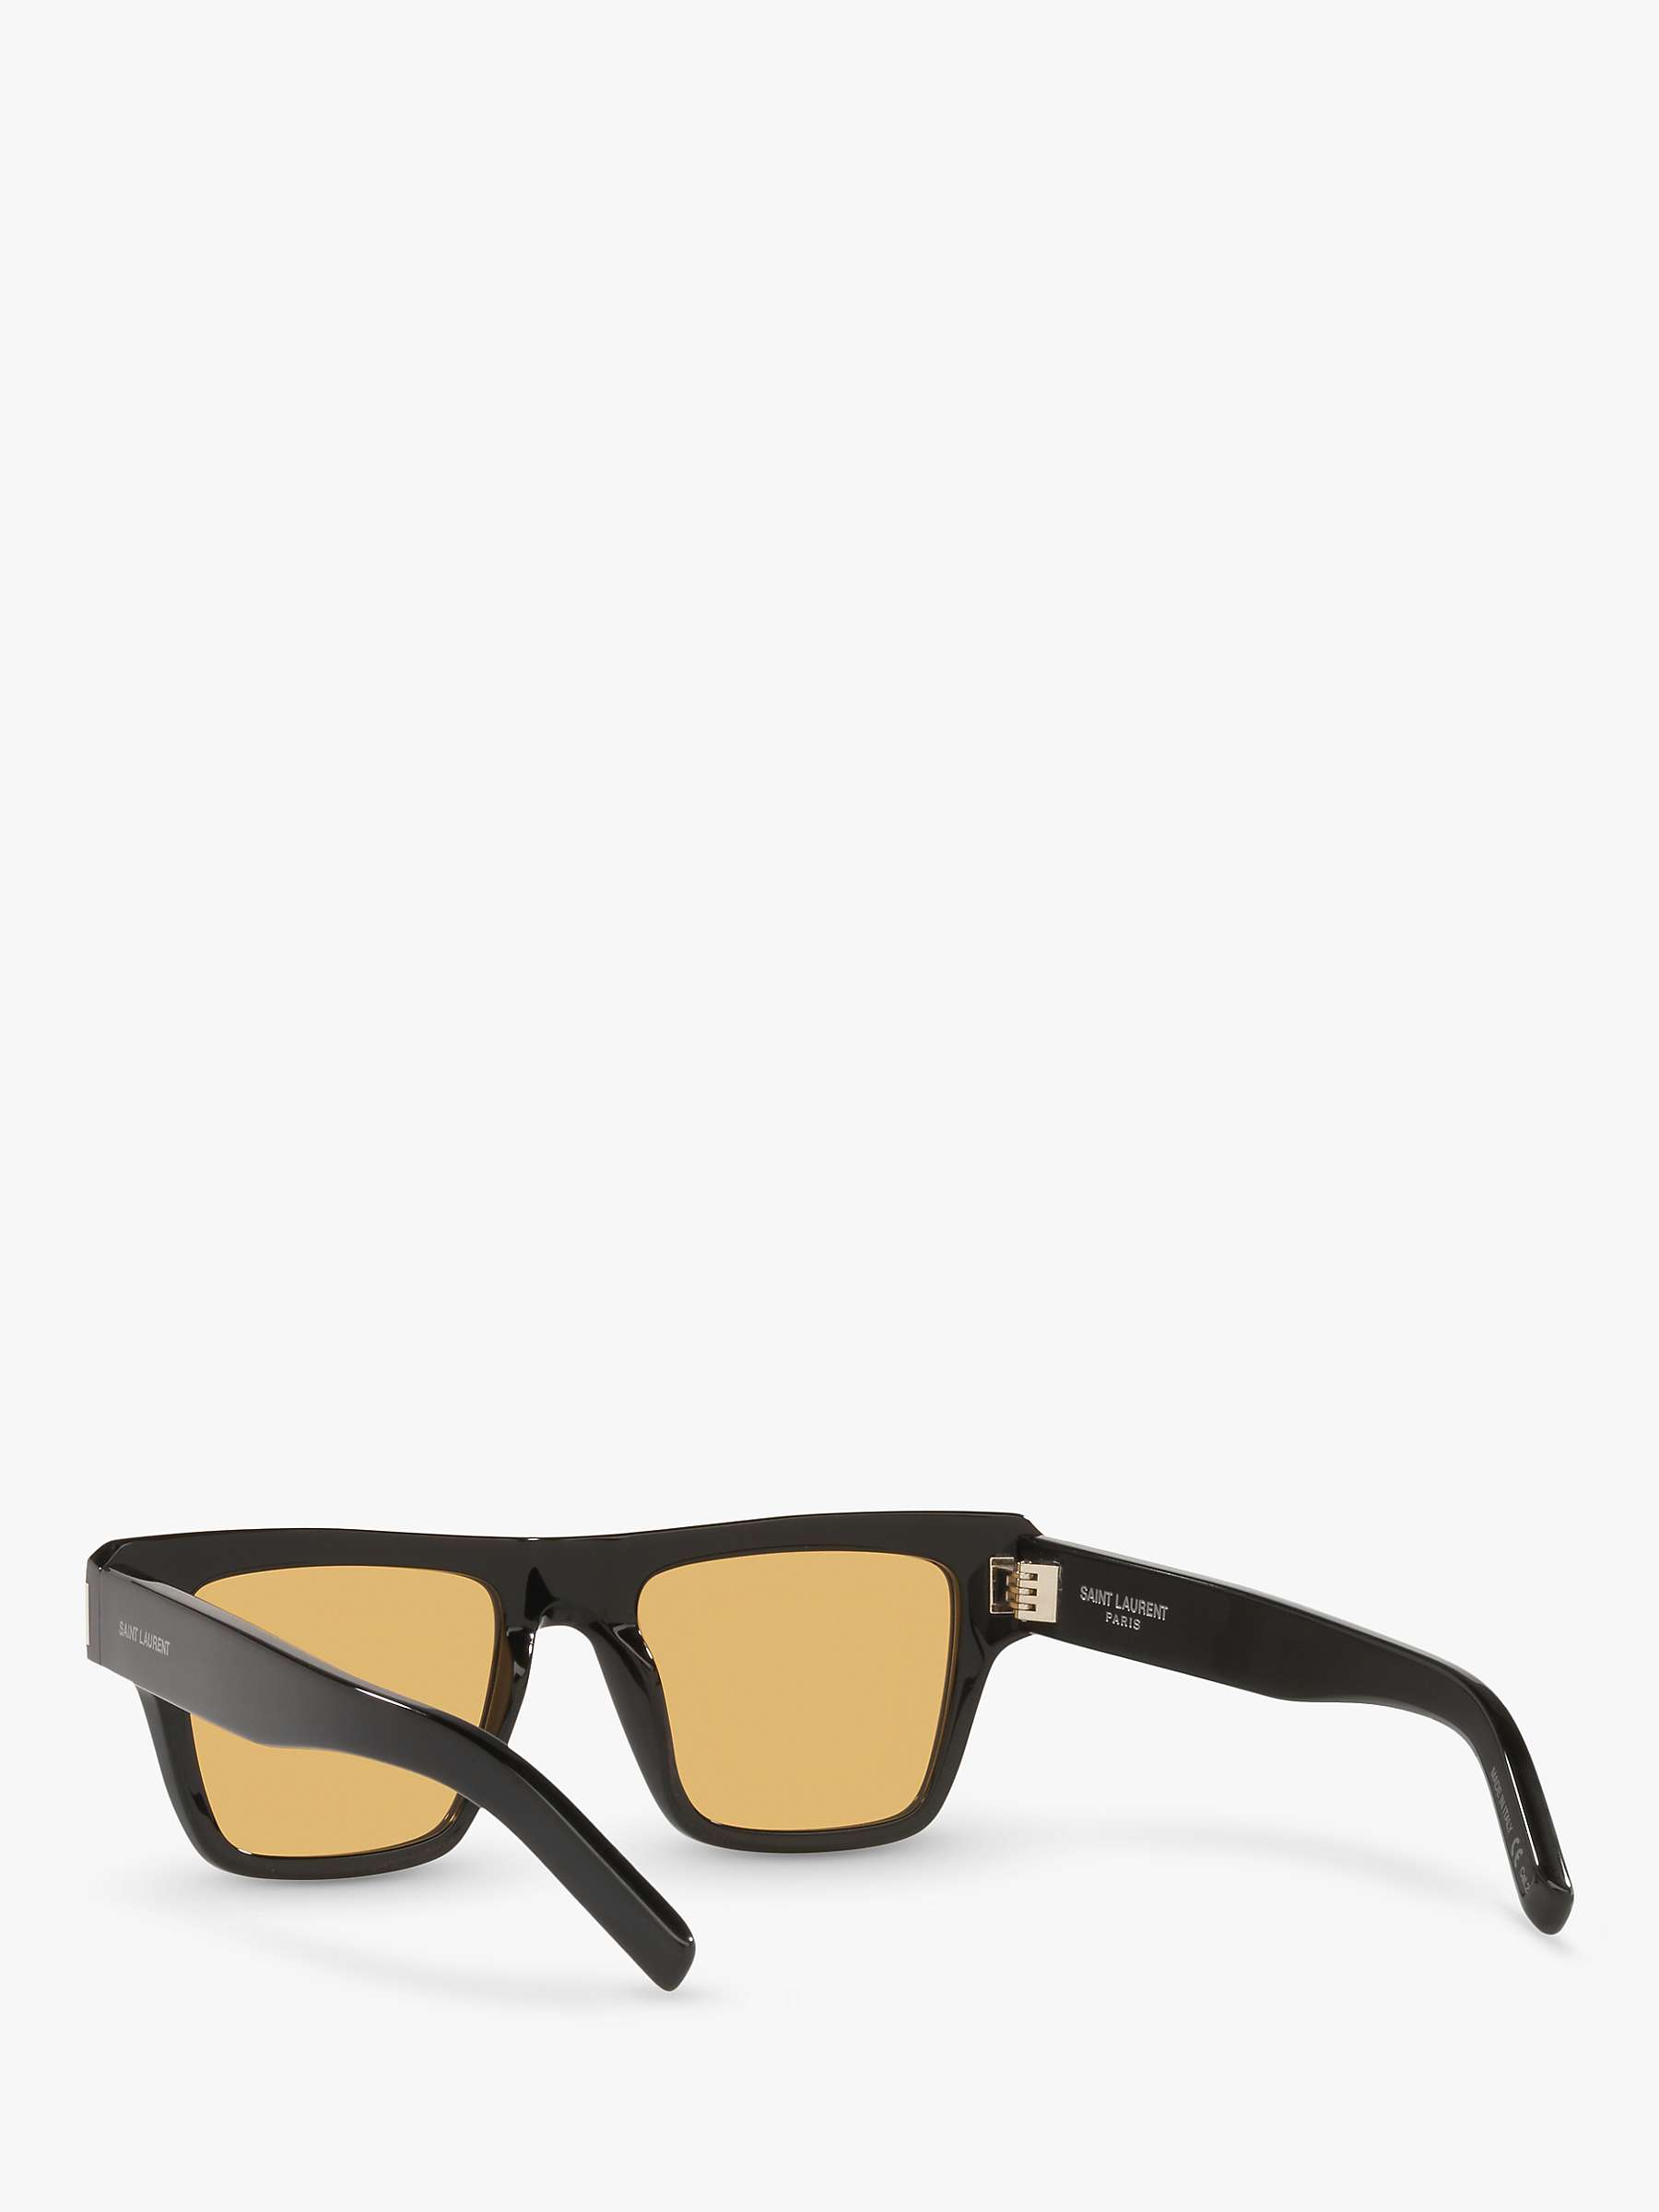 Buy Yves Saint Laurent SL 469 Men's Rectangular Sunglasses, Shiny Black/Yellow Online at johnlewis.com